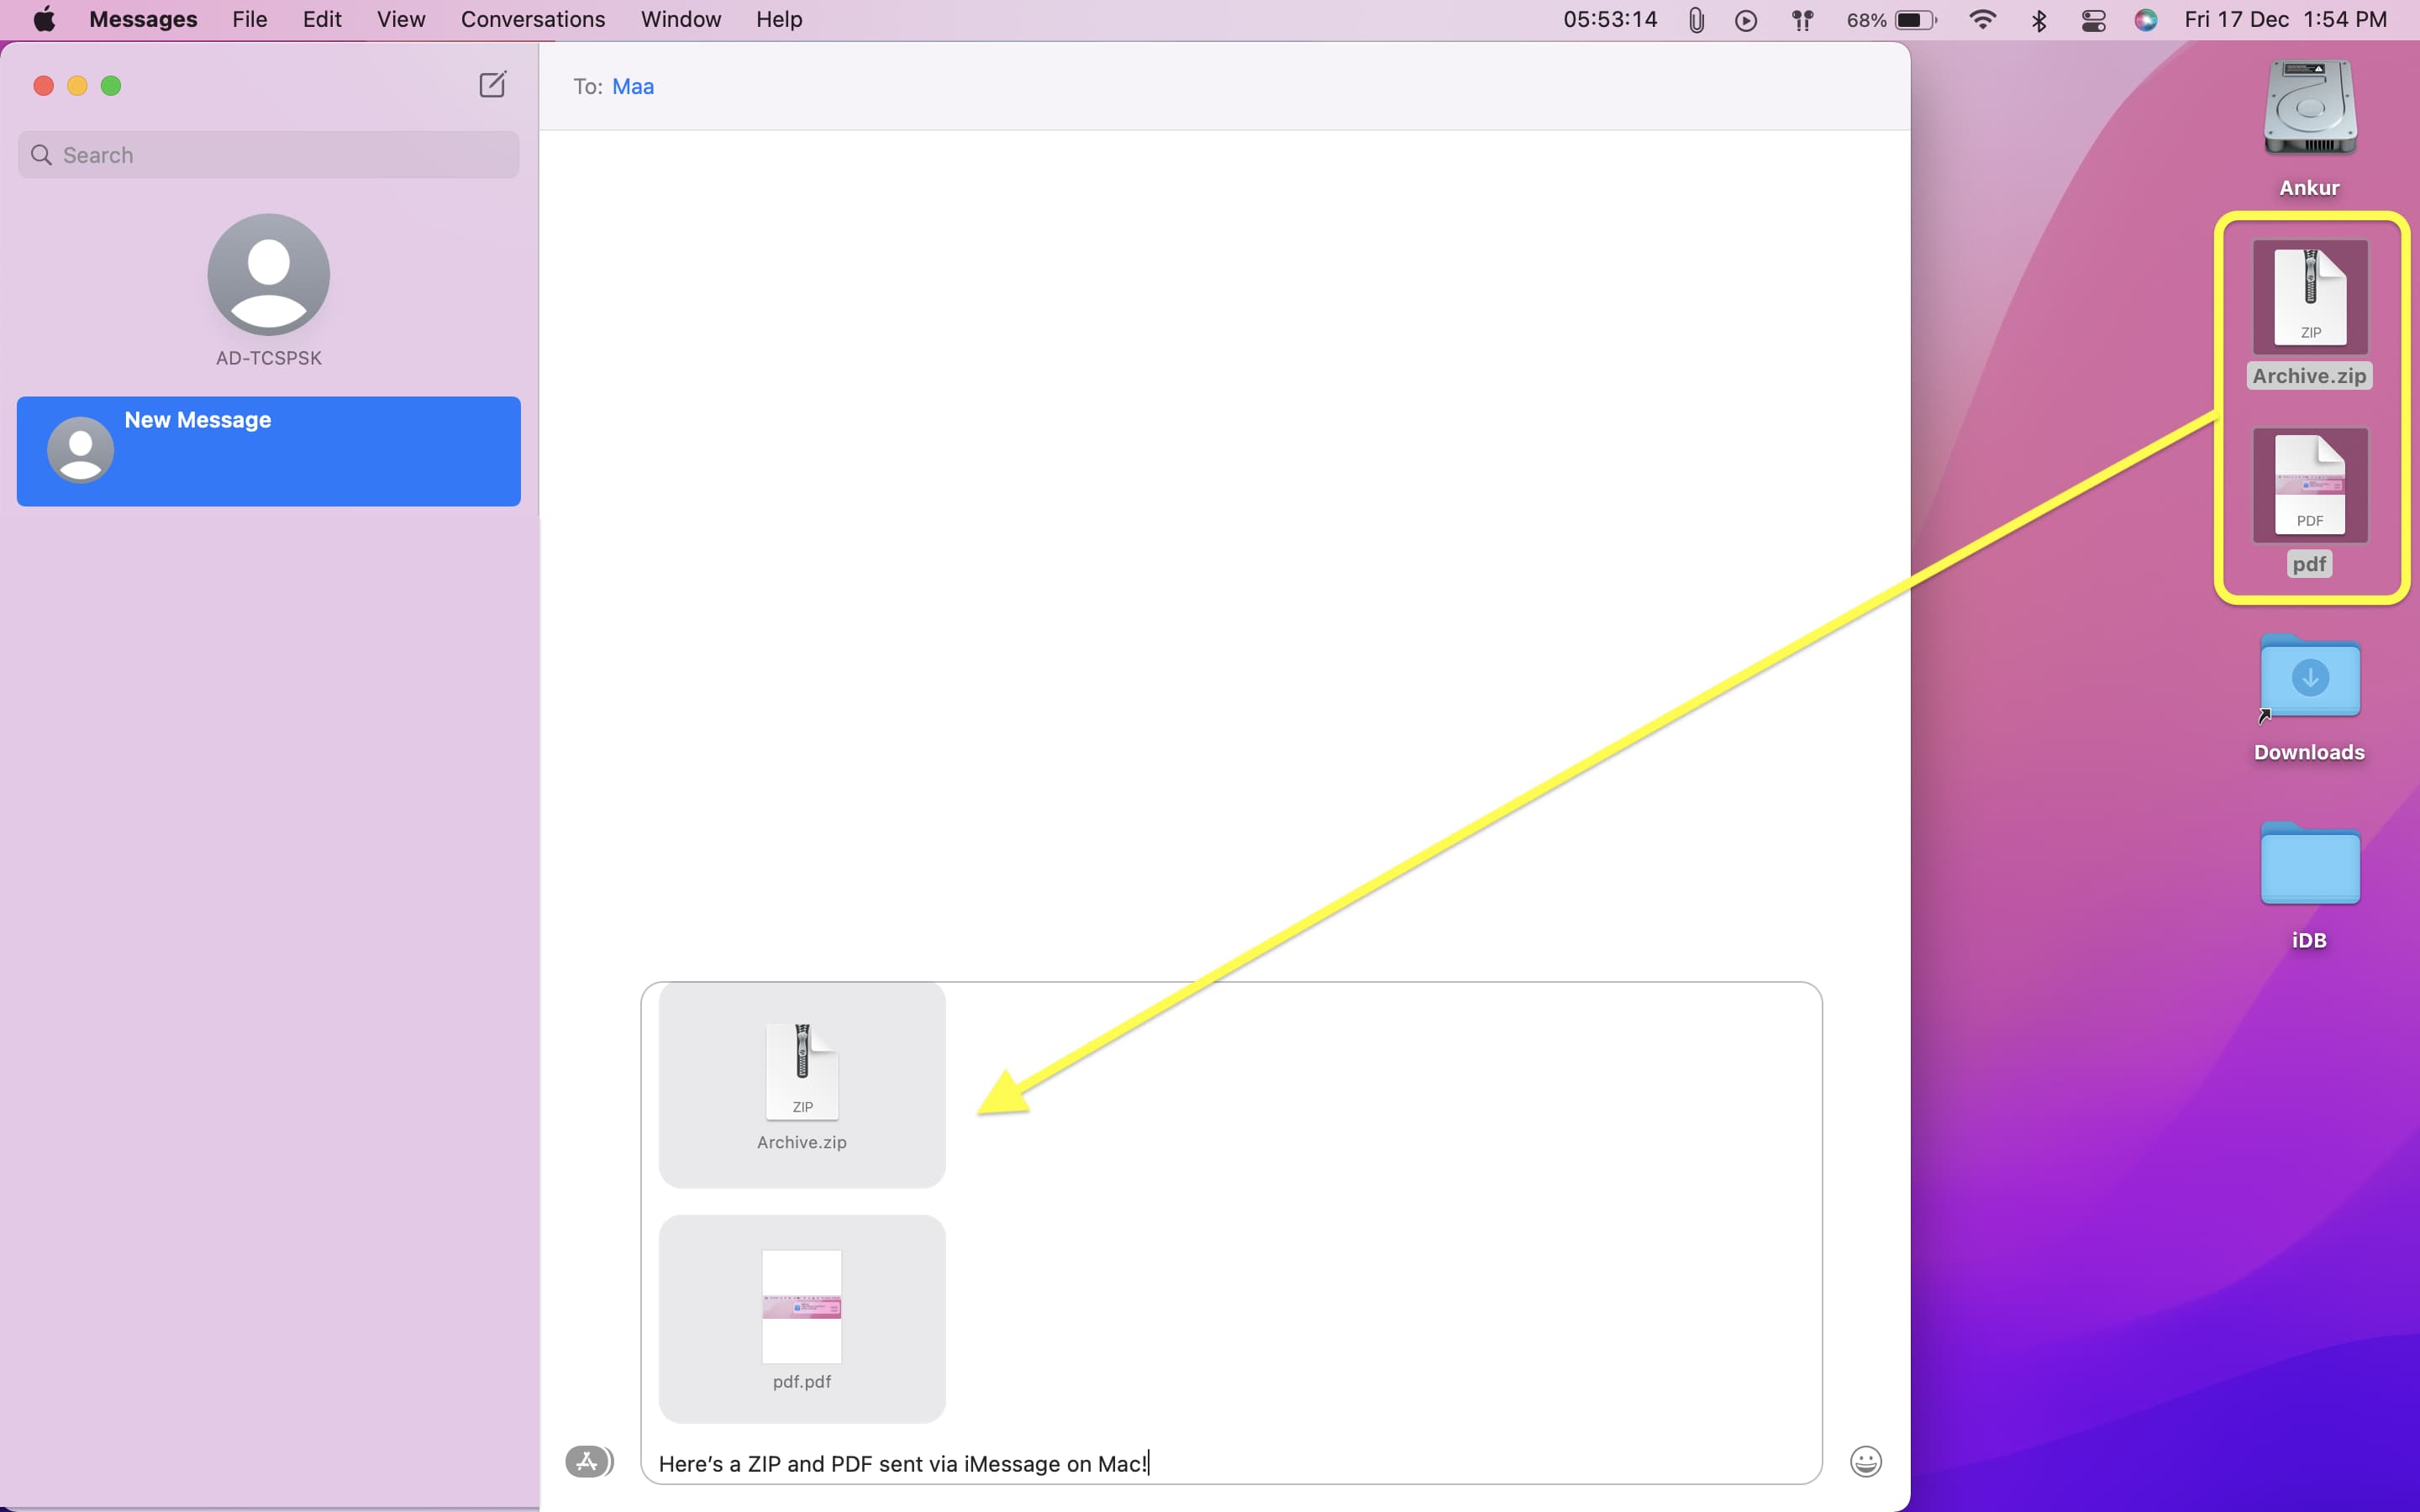 Send PDF and ZIP via iMessage on Mac